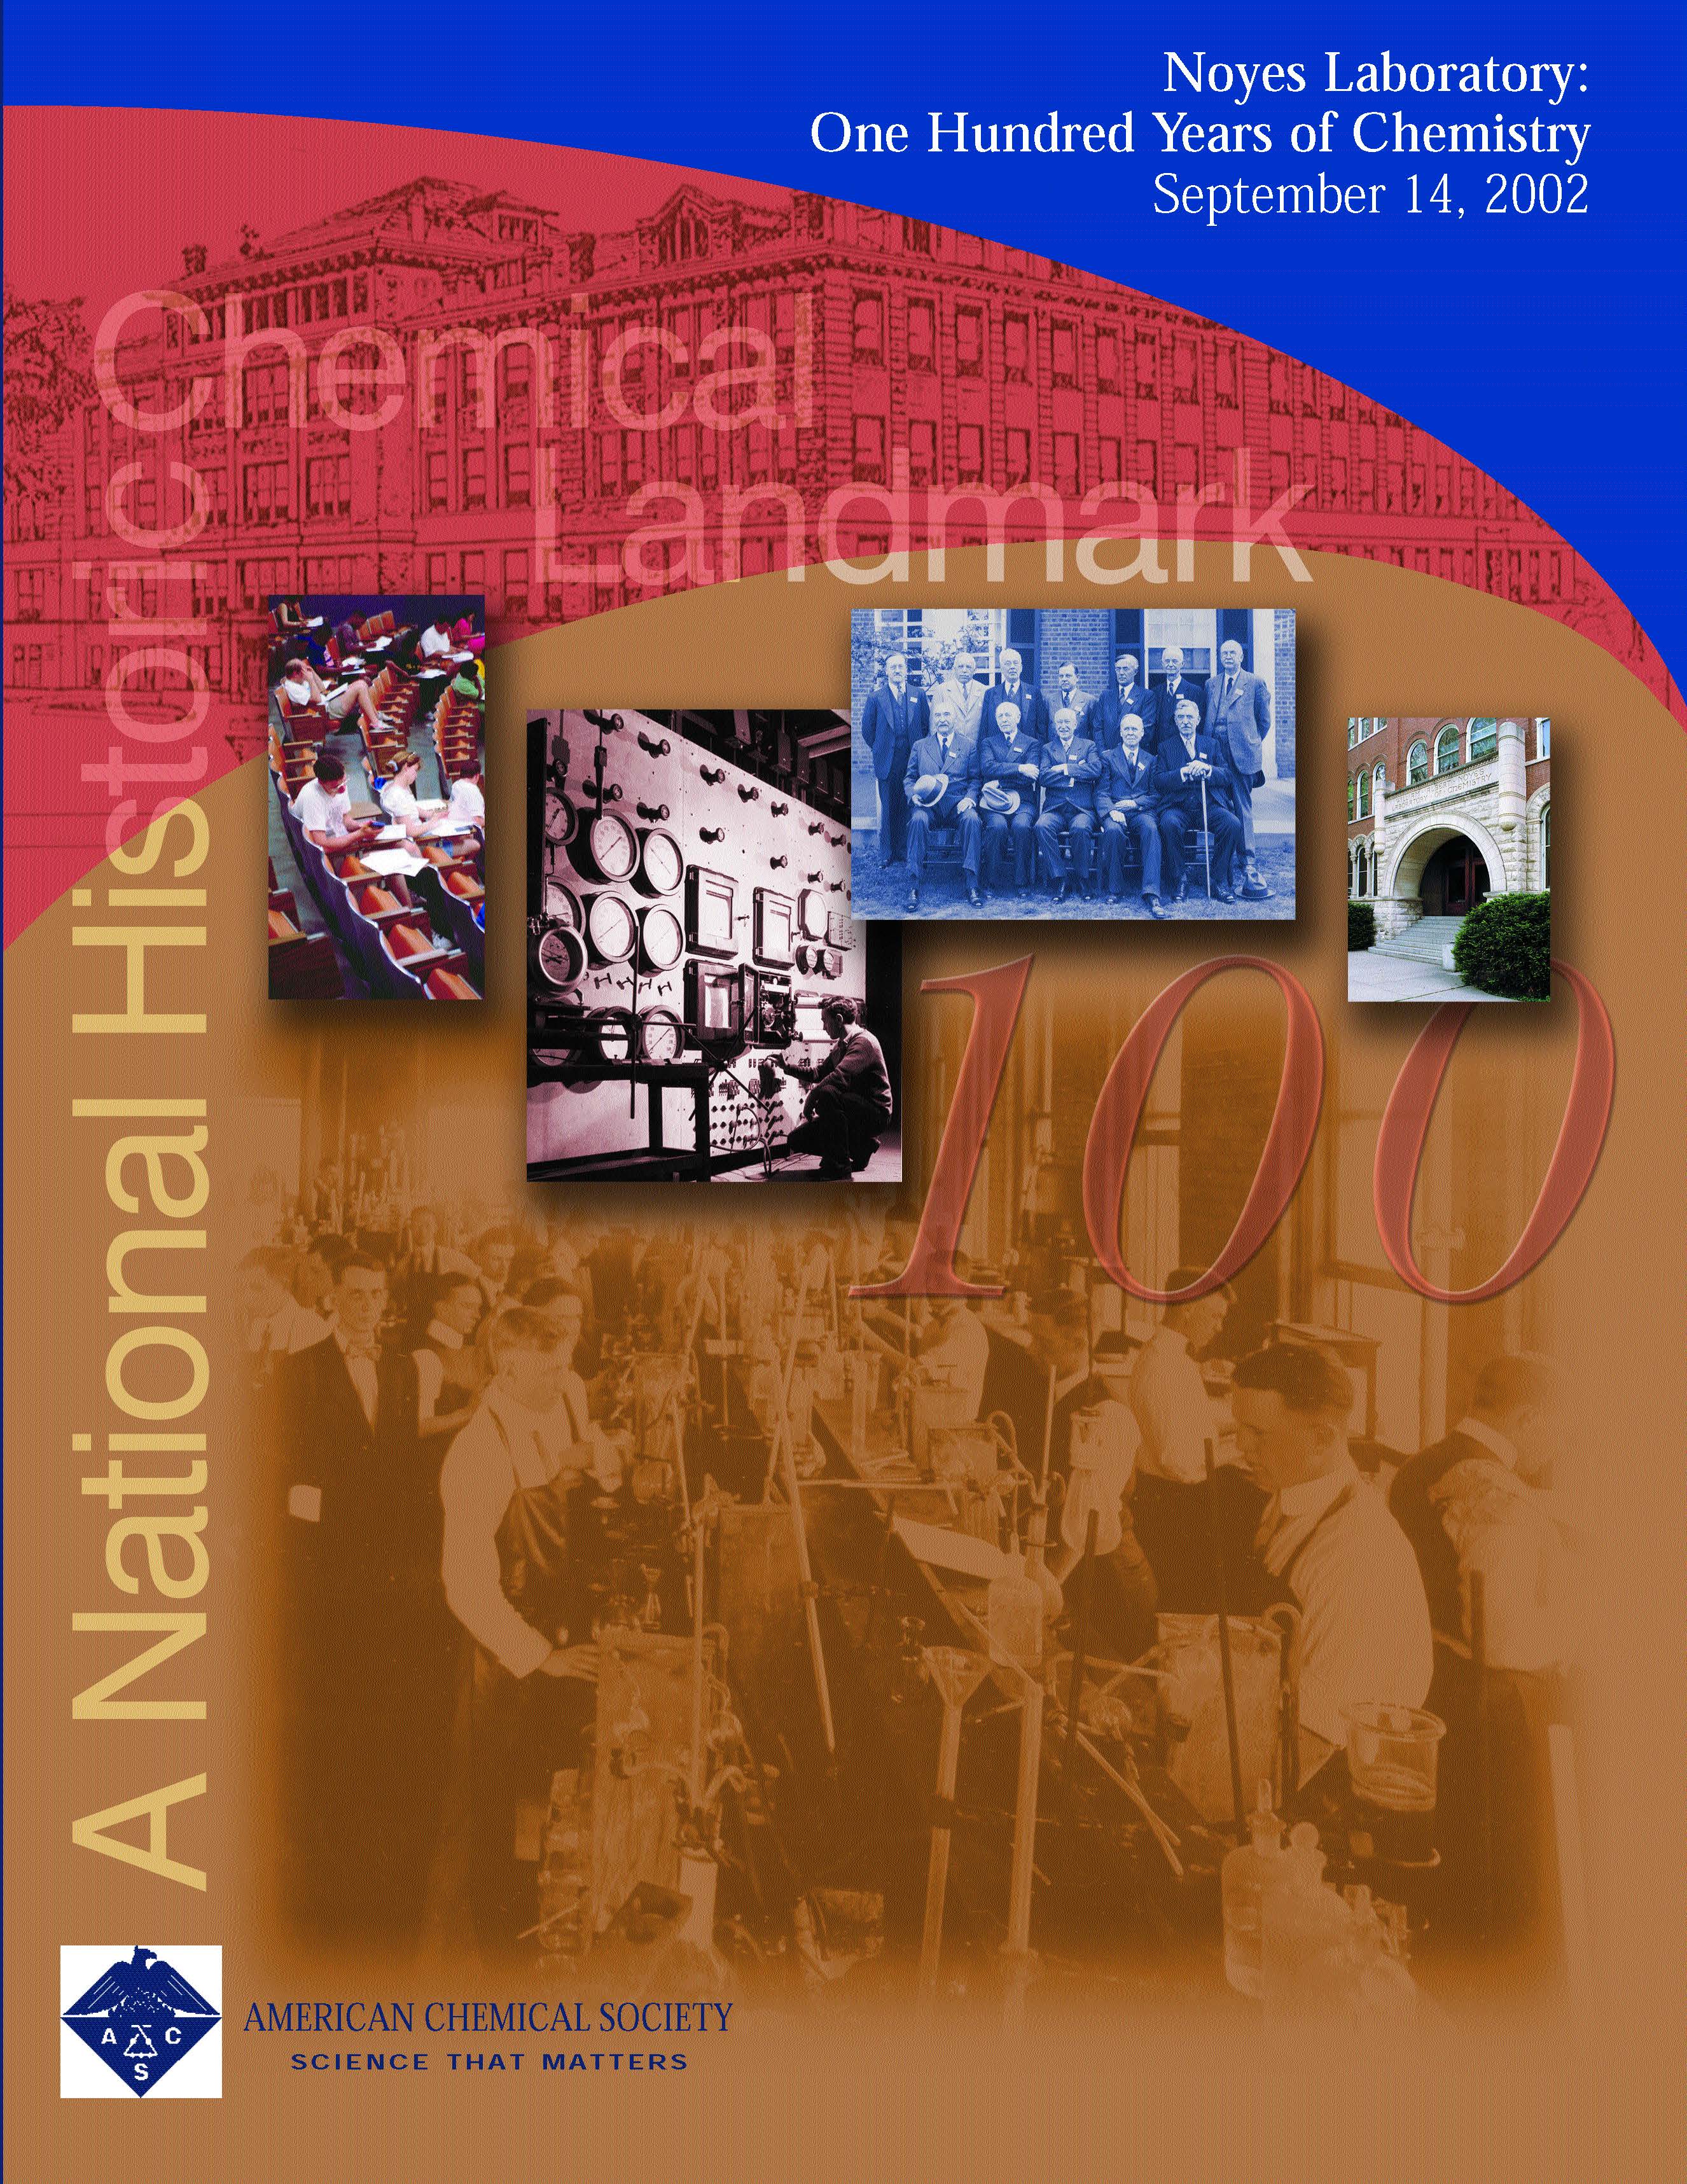 “Noyes Laboratory: One Hundred Years of Chemistry” commemorative booklet